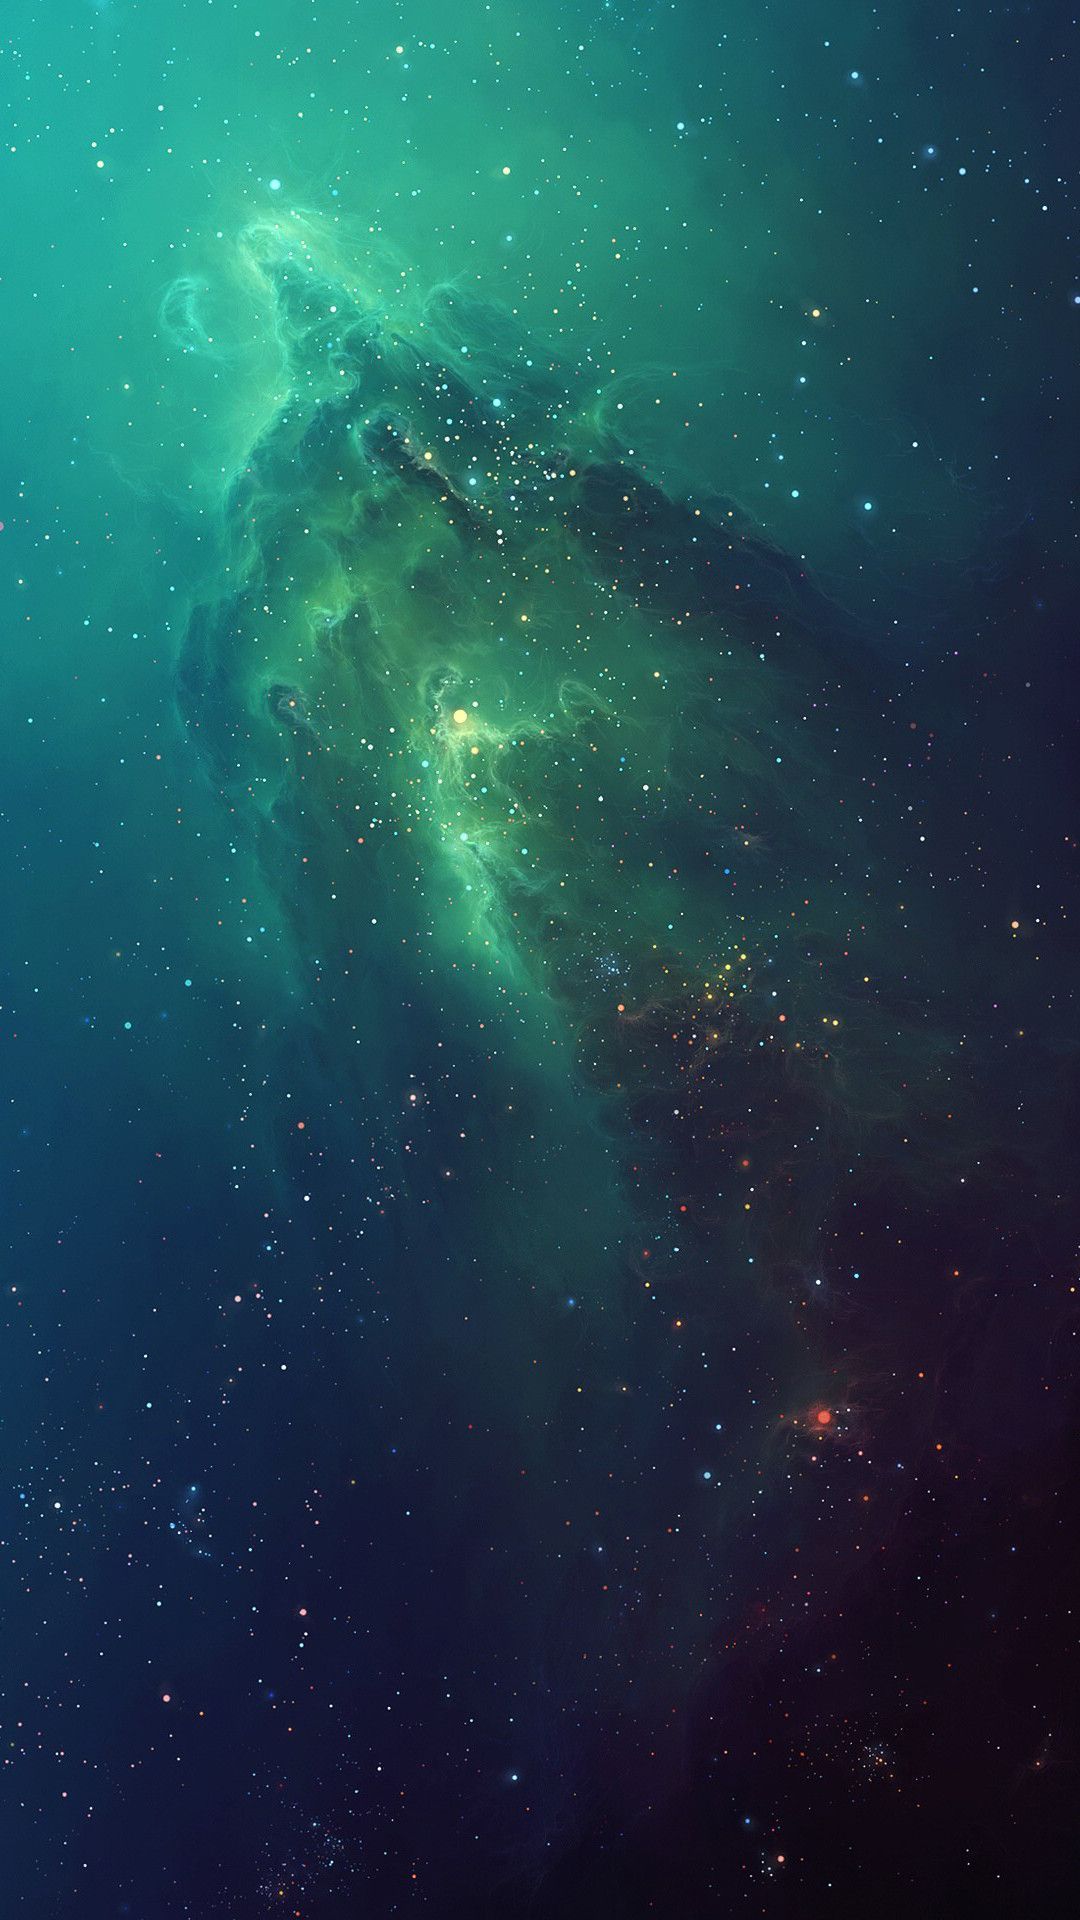 Space Background Image. Nebula wallpaper, Wallpaper space, Galaxy art